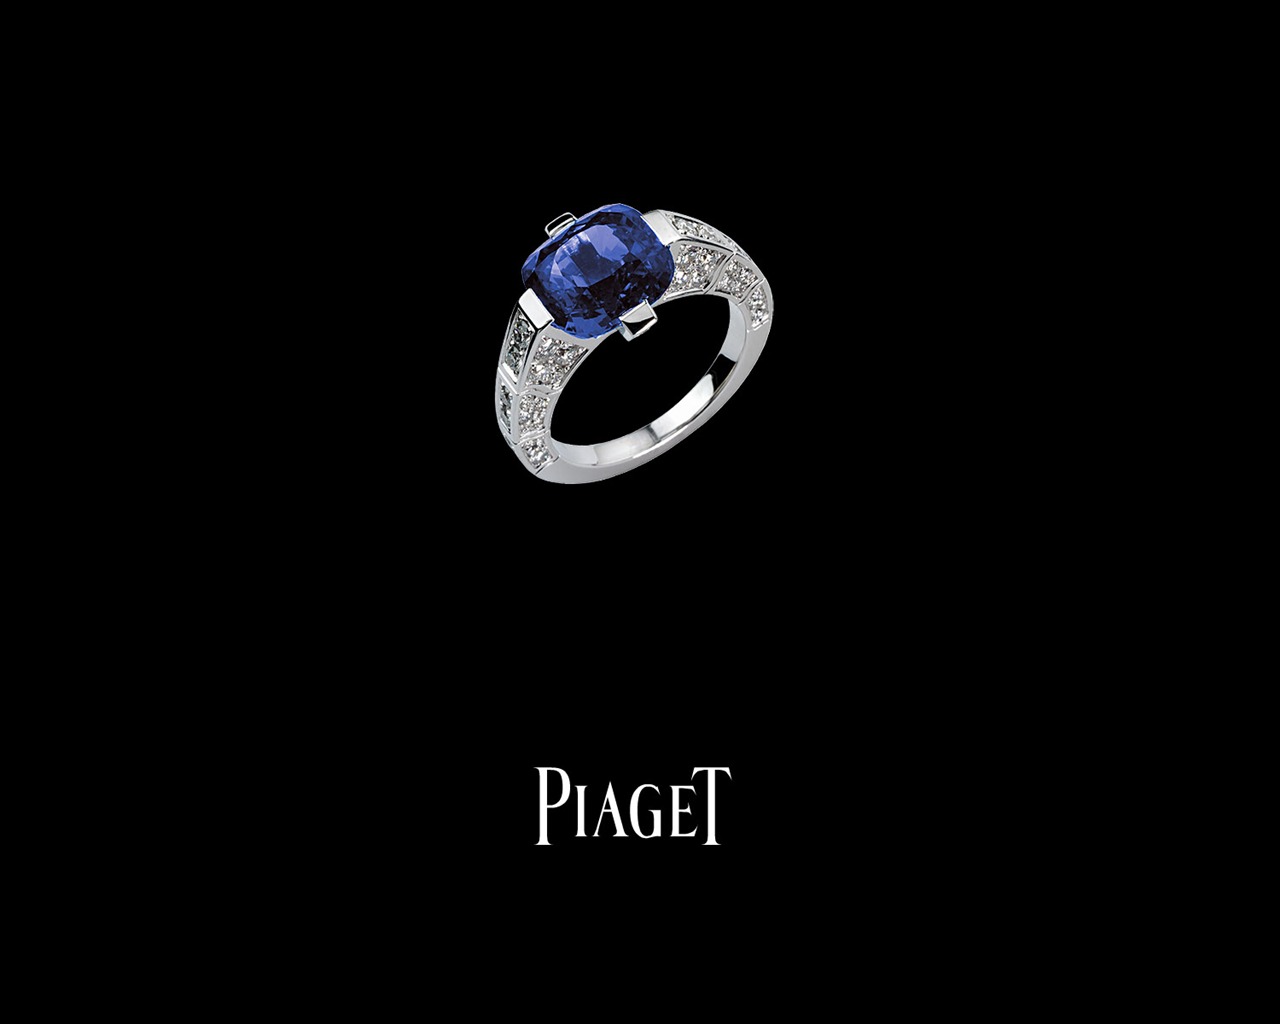 Piaget diamond jewelry wallpaper (4) #19 - 1280x1024